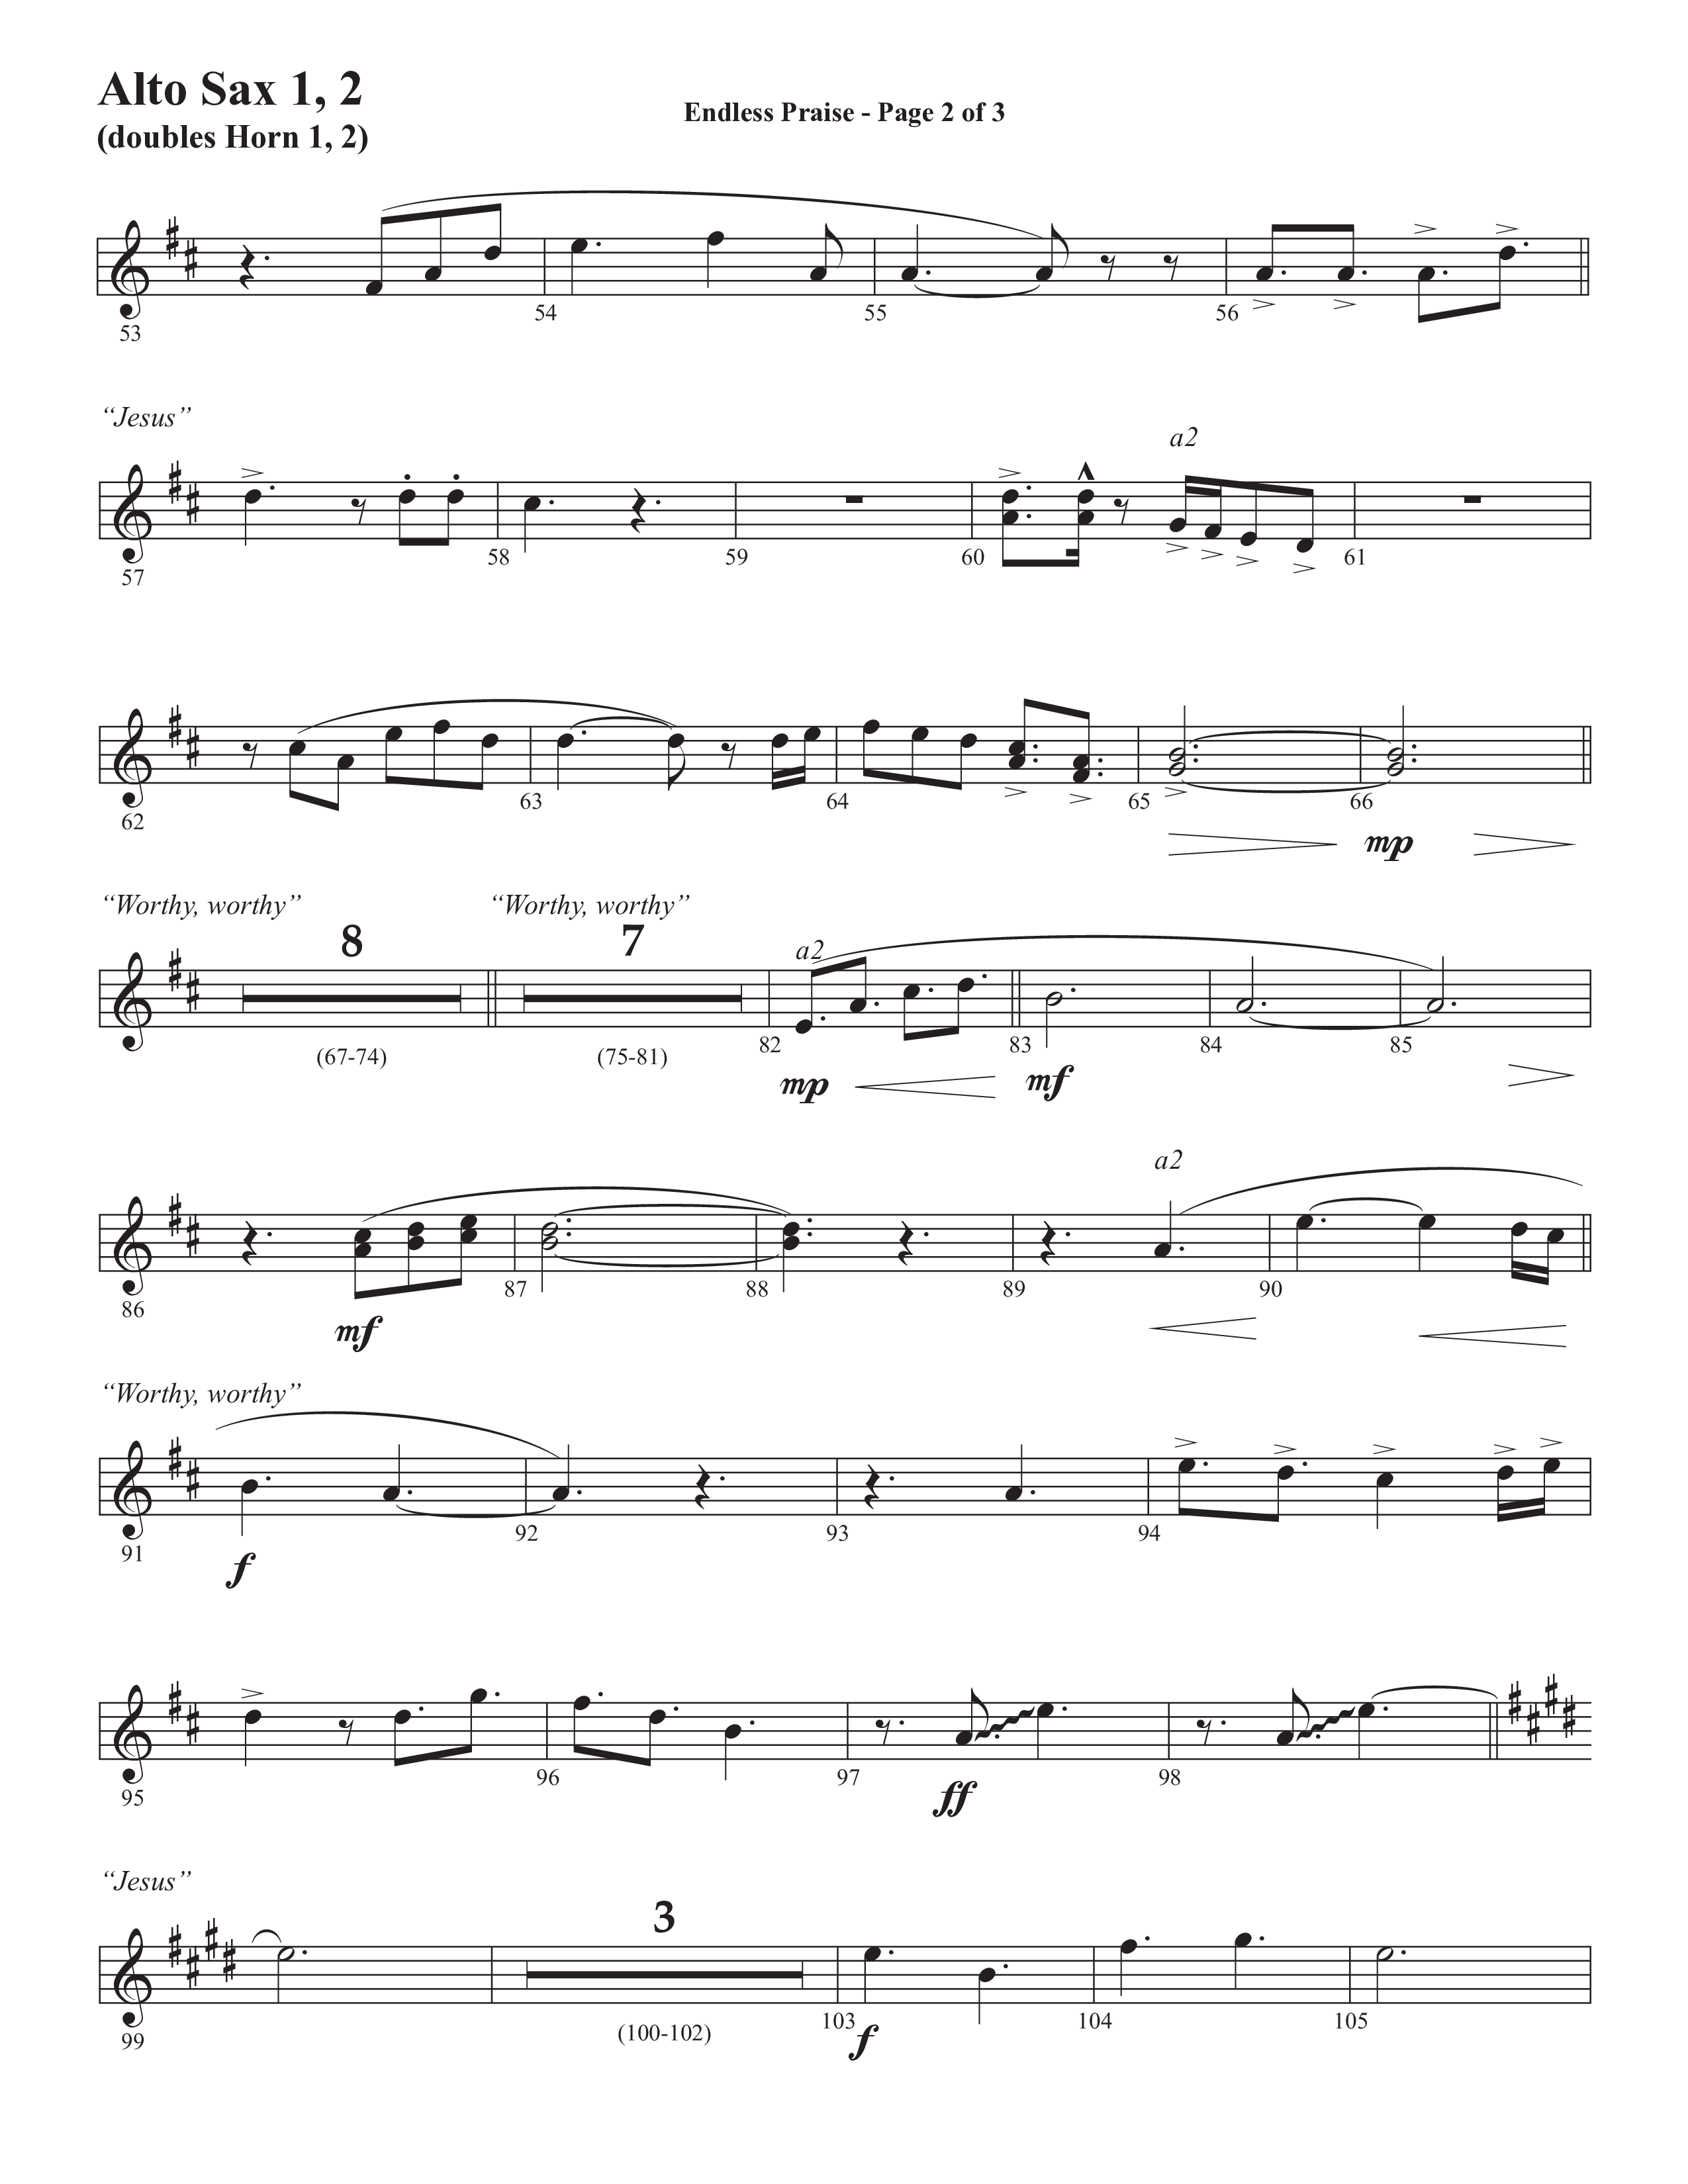 Endless Praise (Choral Anthem SATB) Alto Sax 1/2 (Semsen Music / Arr. Daniel Semsen)